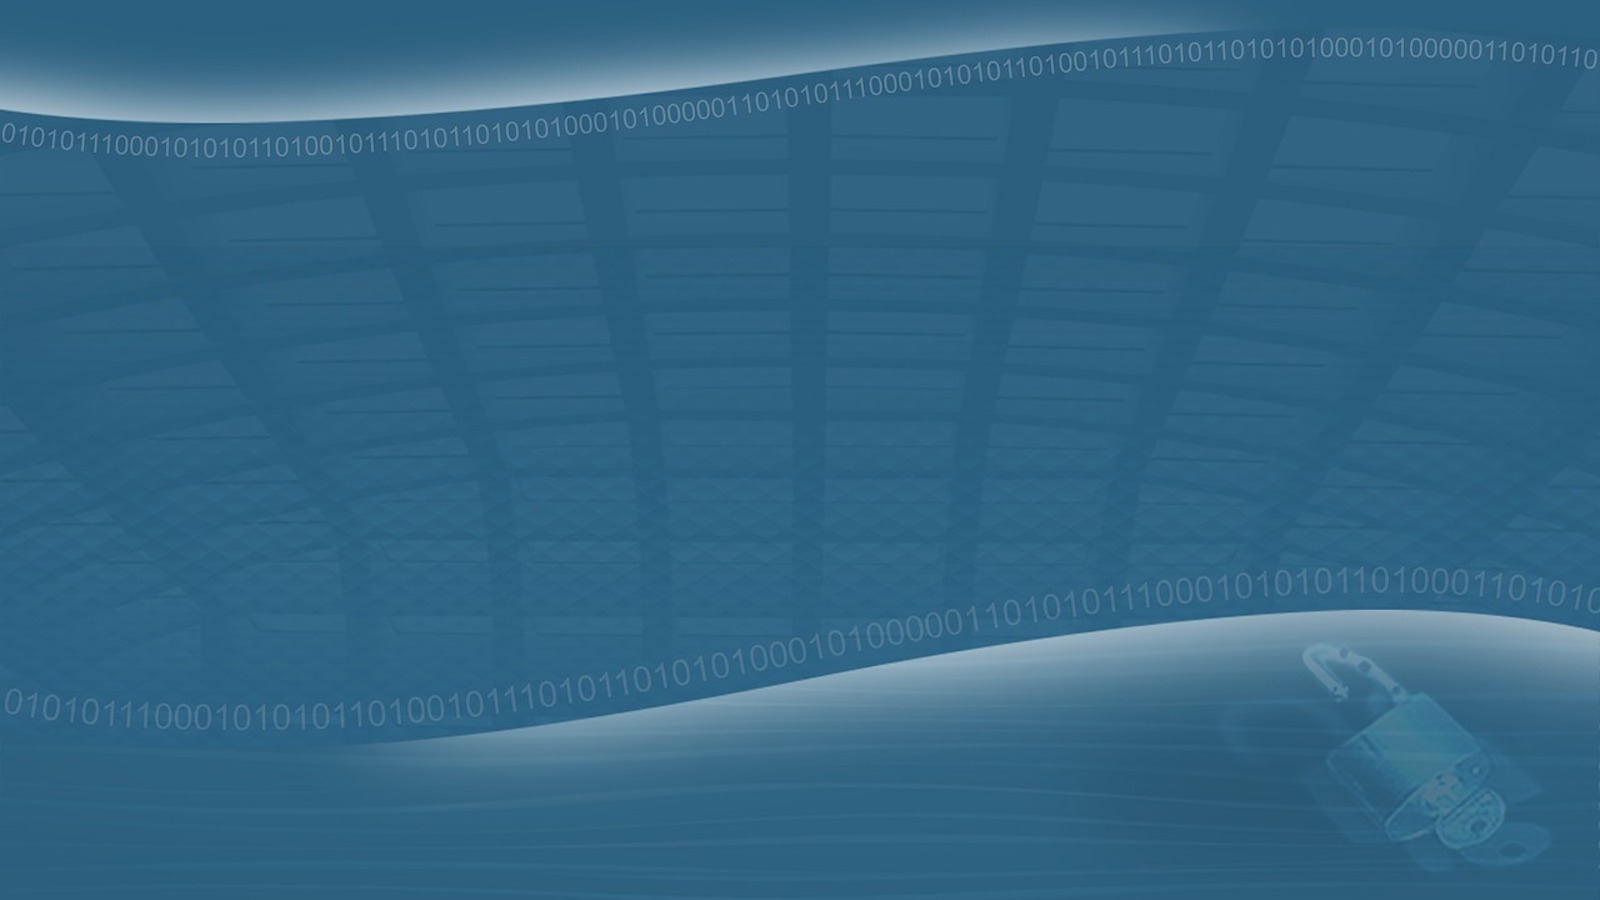 Blue geometric background with binary code